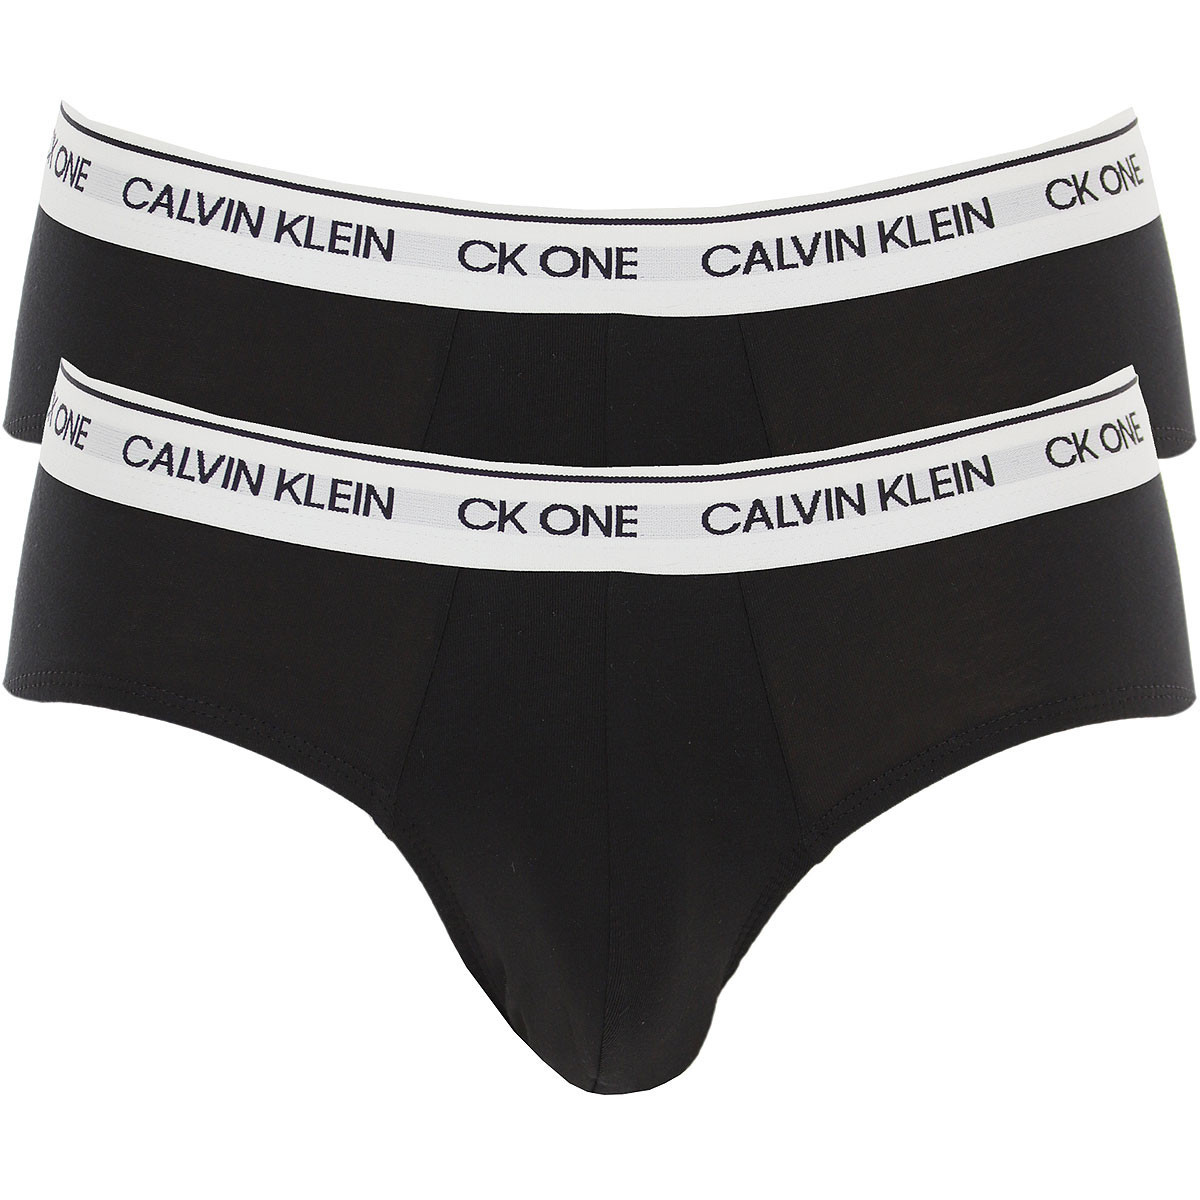 Slipy černá černá S model 14642593 - Calvin Klein